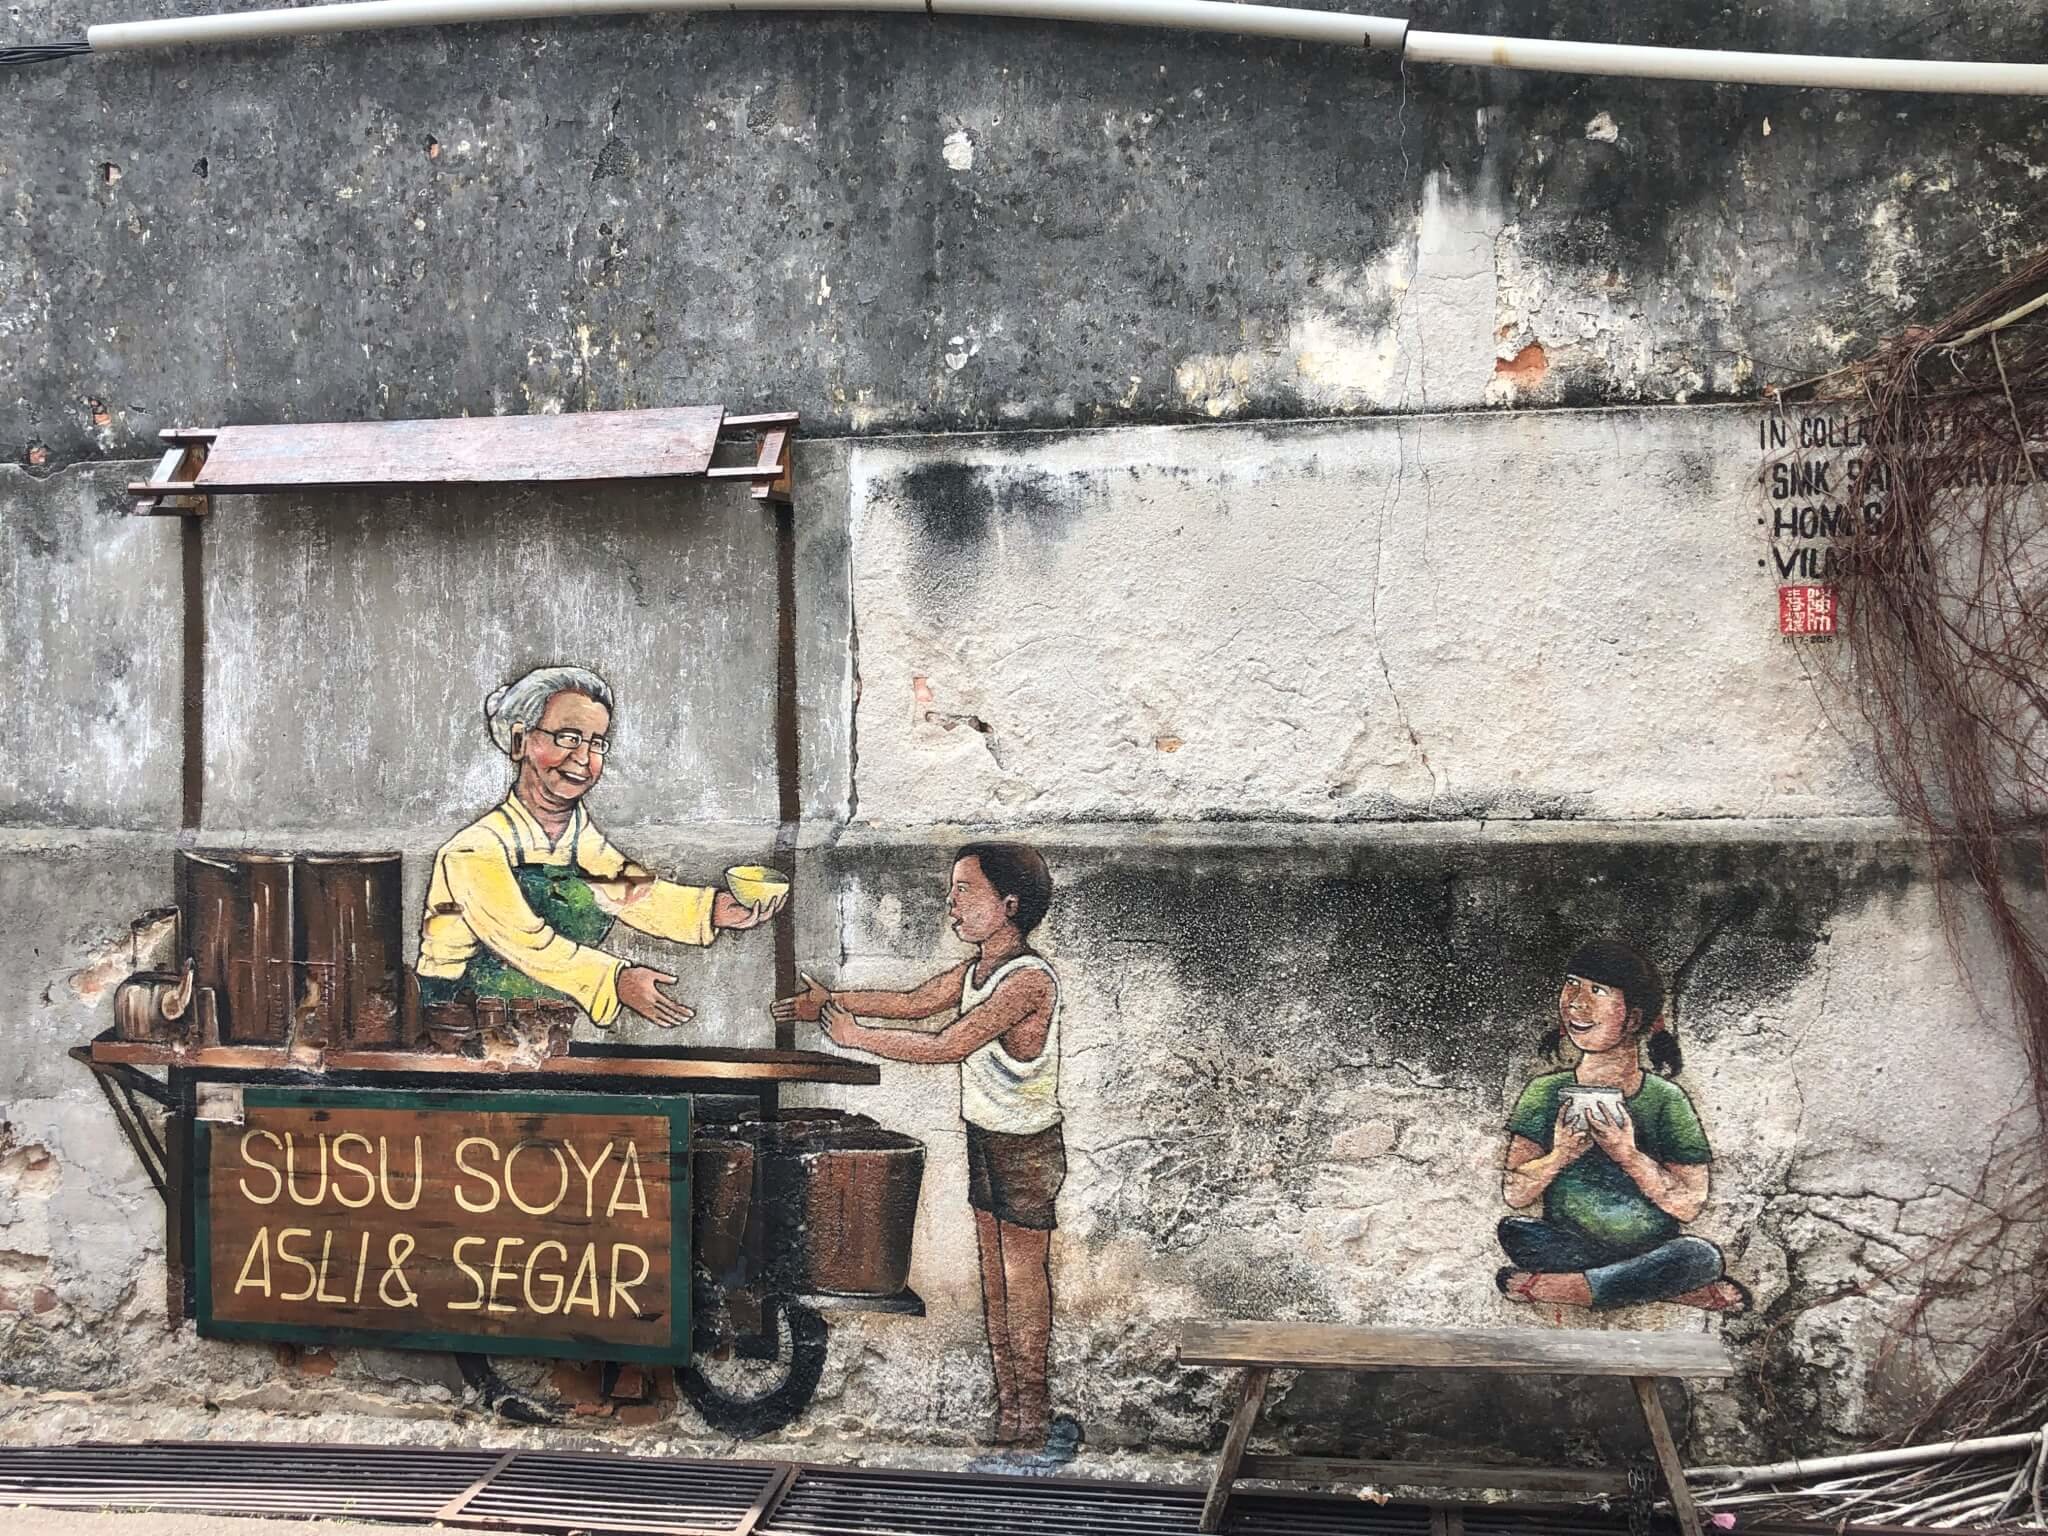 Penang Street Art is a MUST